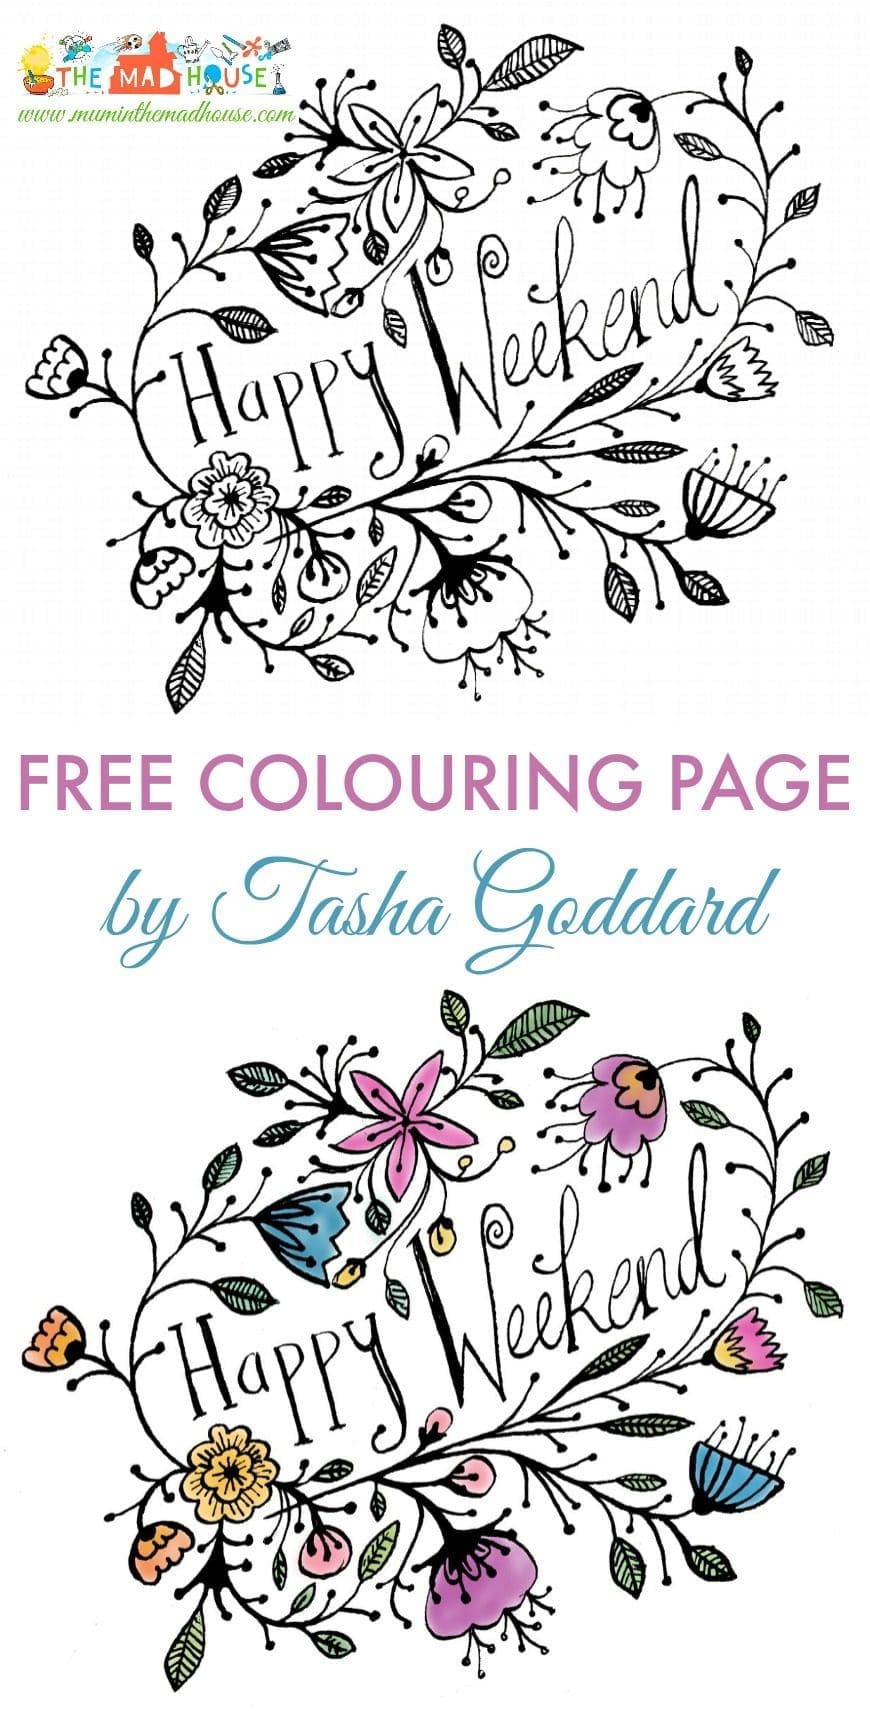 tasha goddard coloring pages - photo #1